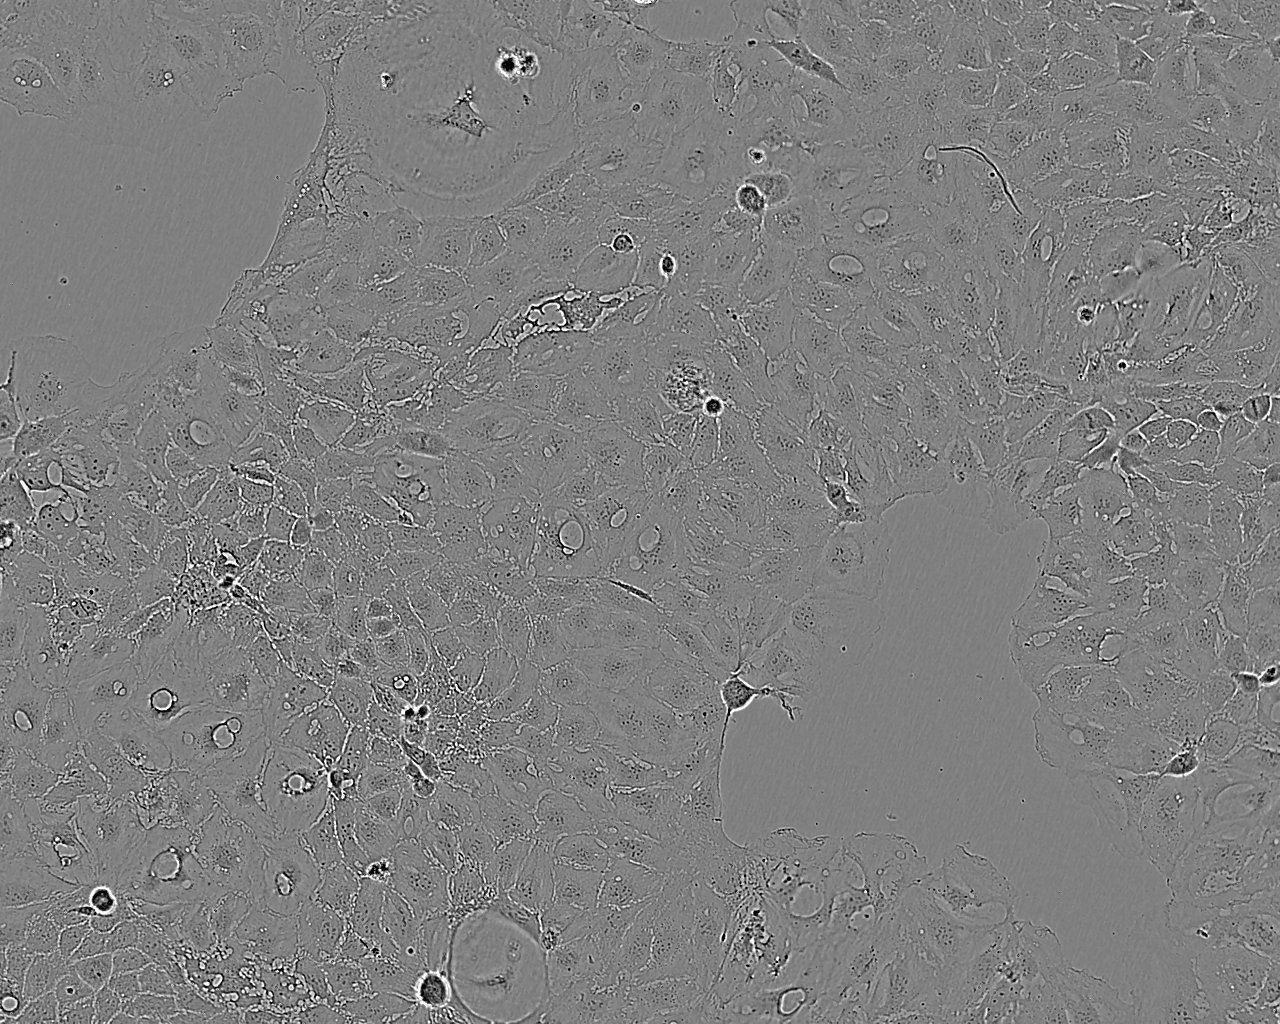 HCC1569 Epithelial Cell|人乳腺癌传代细胞(有STR鉴定)